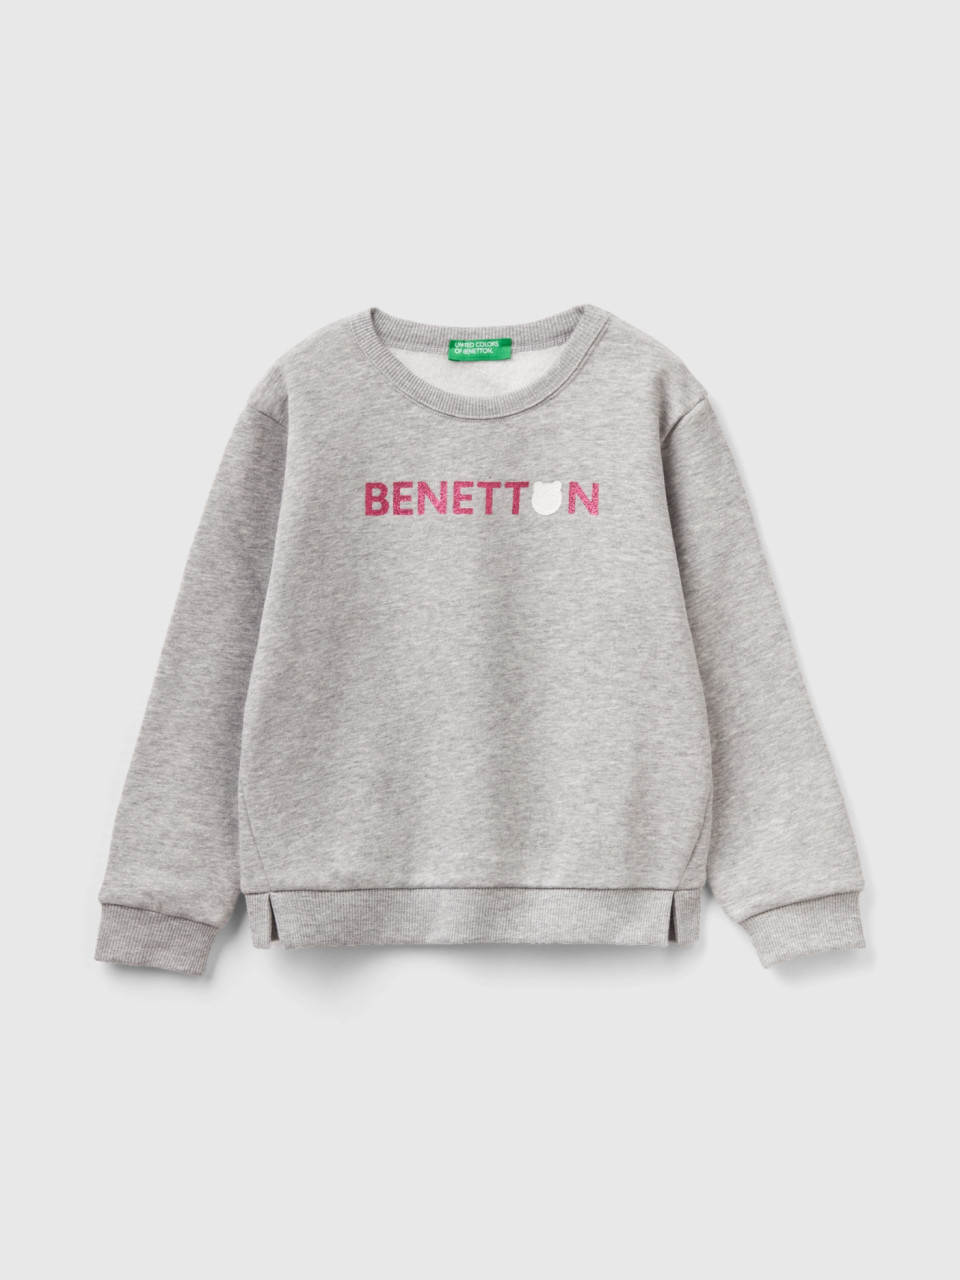 Benetton, Pullover Sweatshirt With Glittery Print, Light Gray, Kids